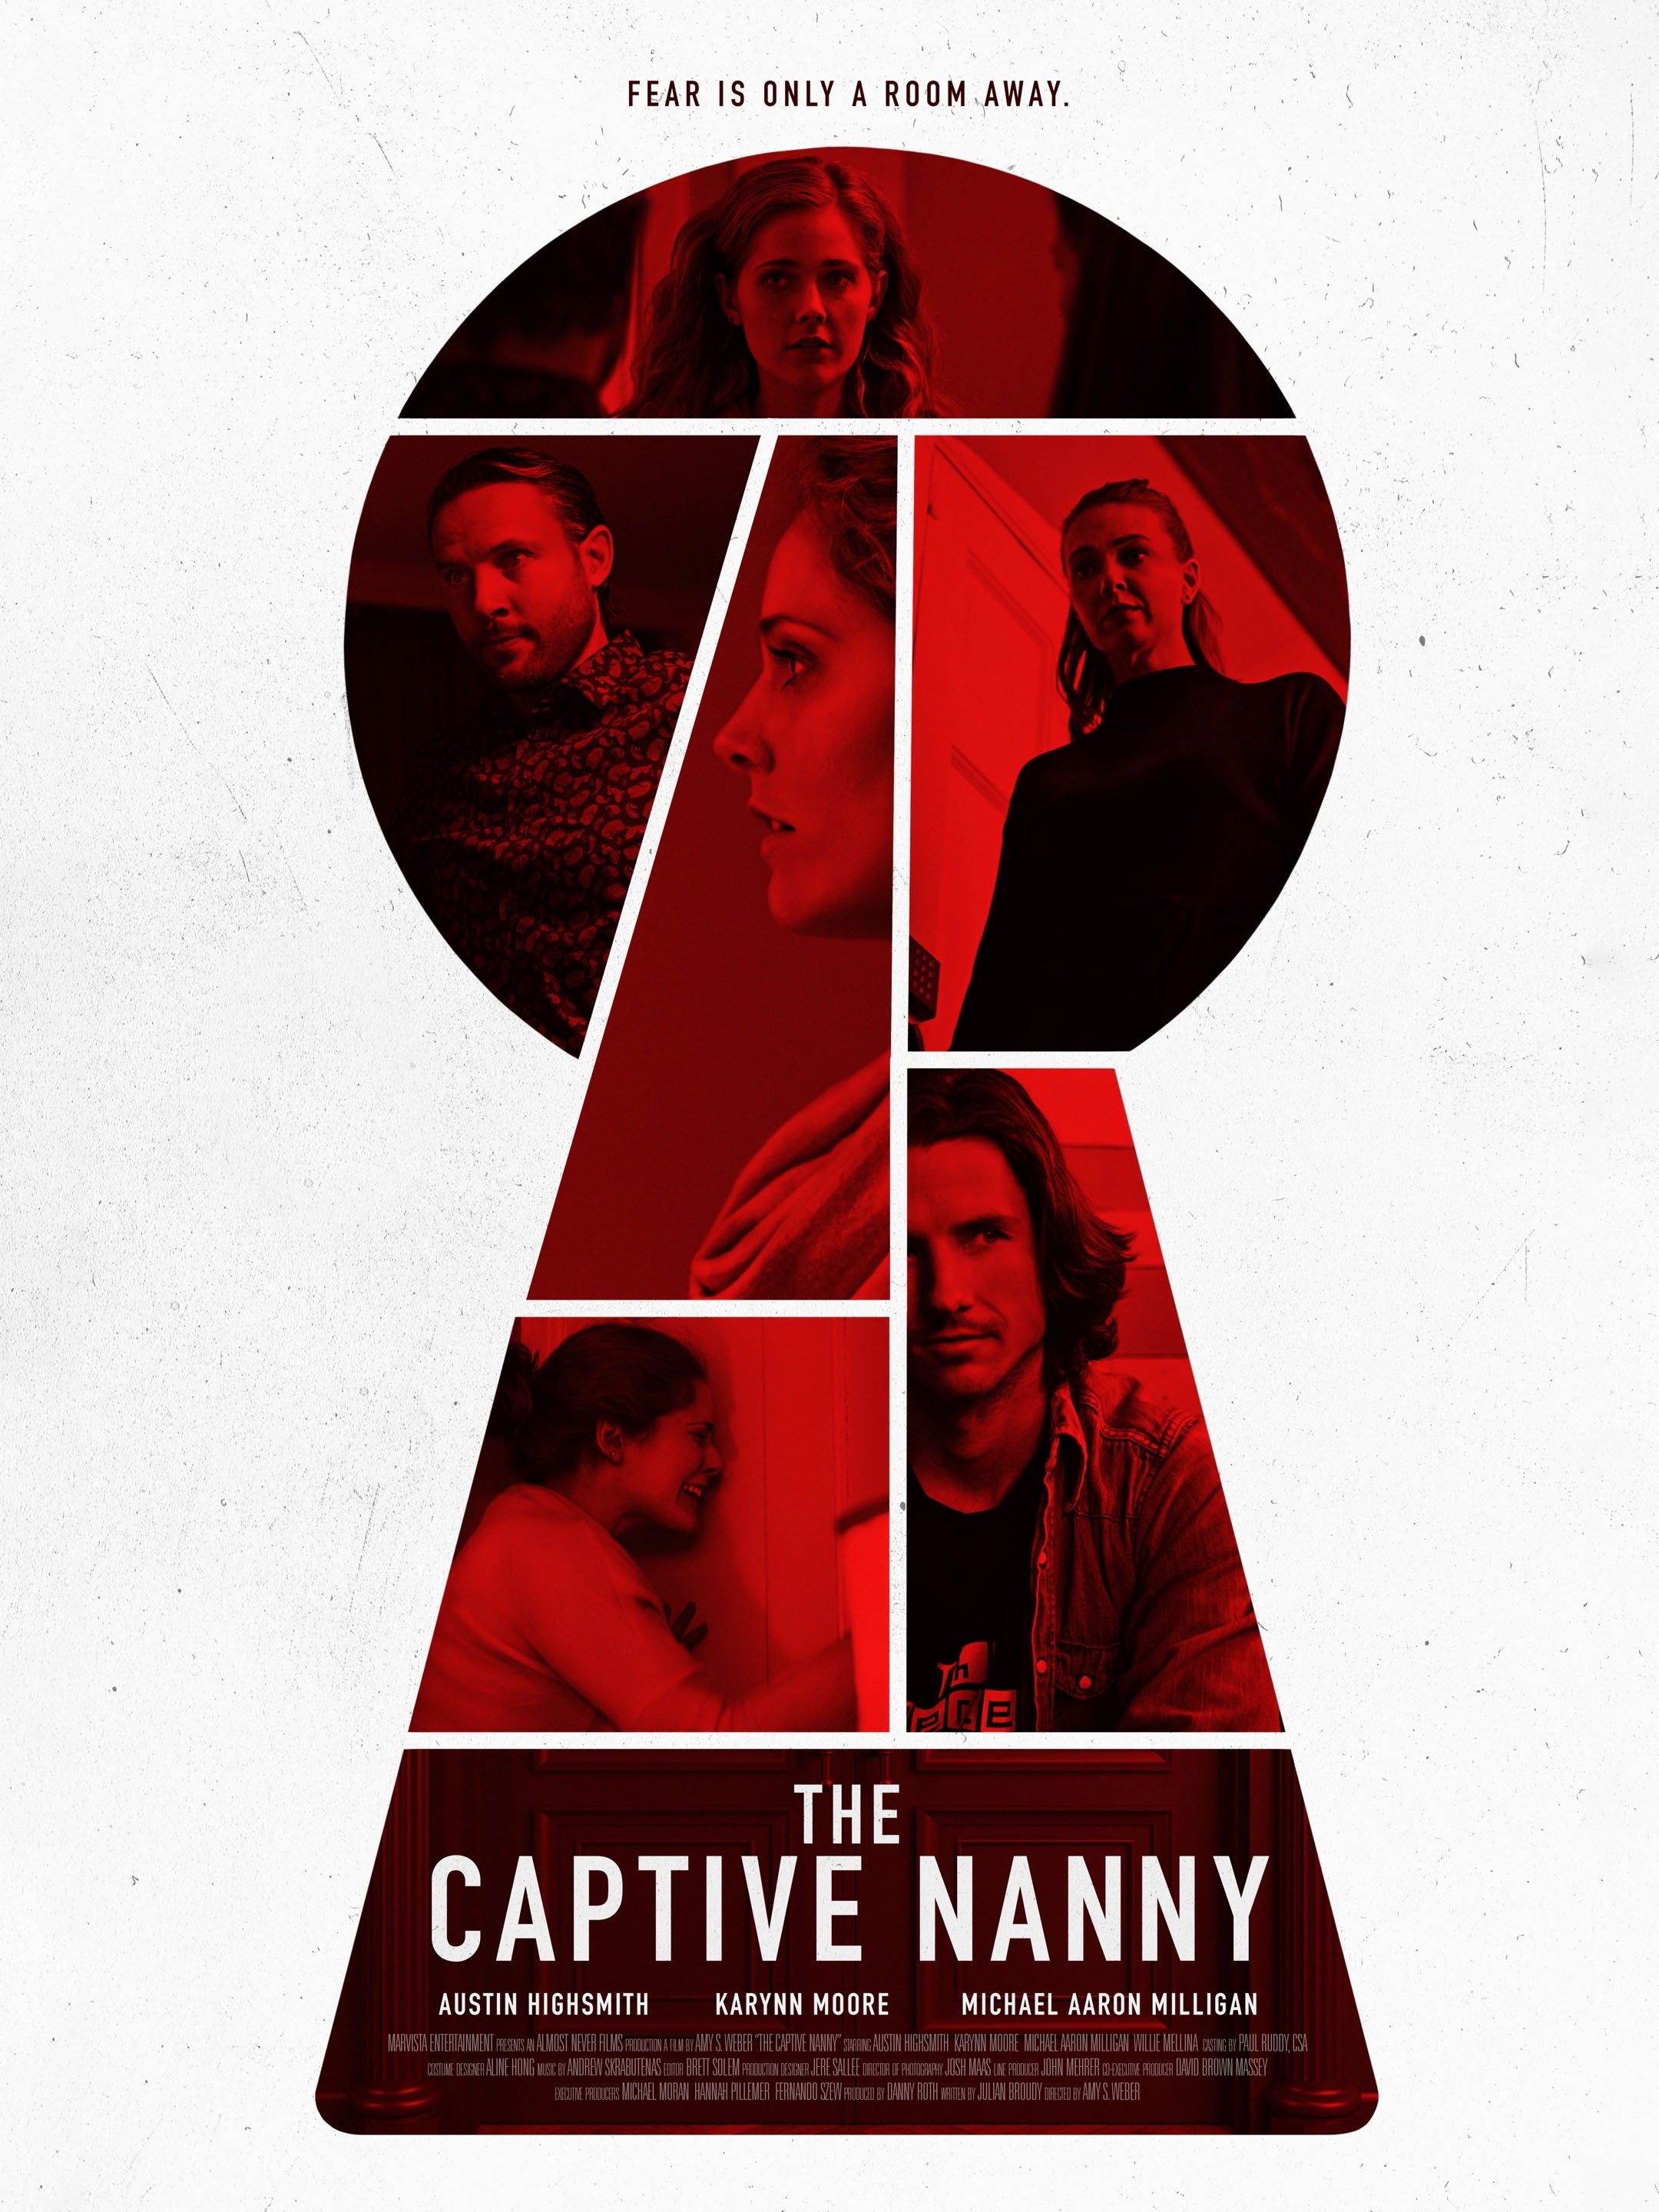 Captive - Rotten Tomatoes